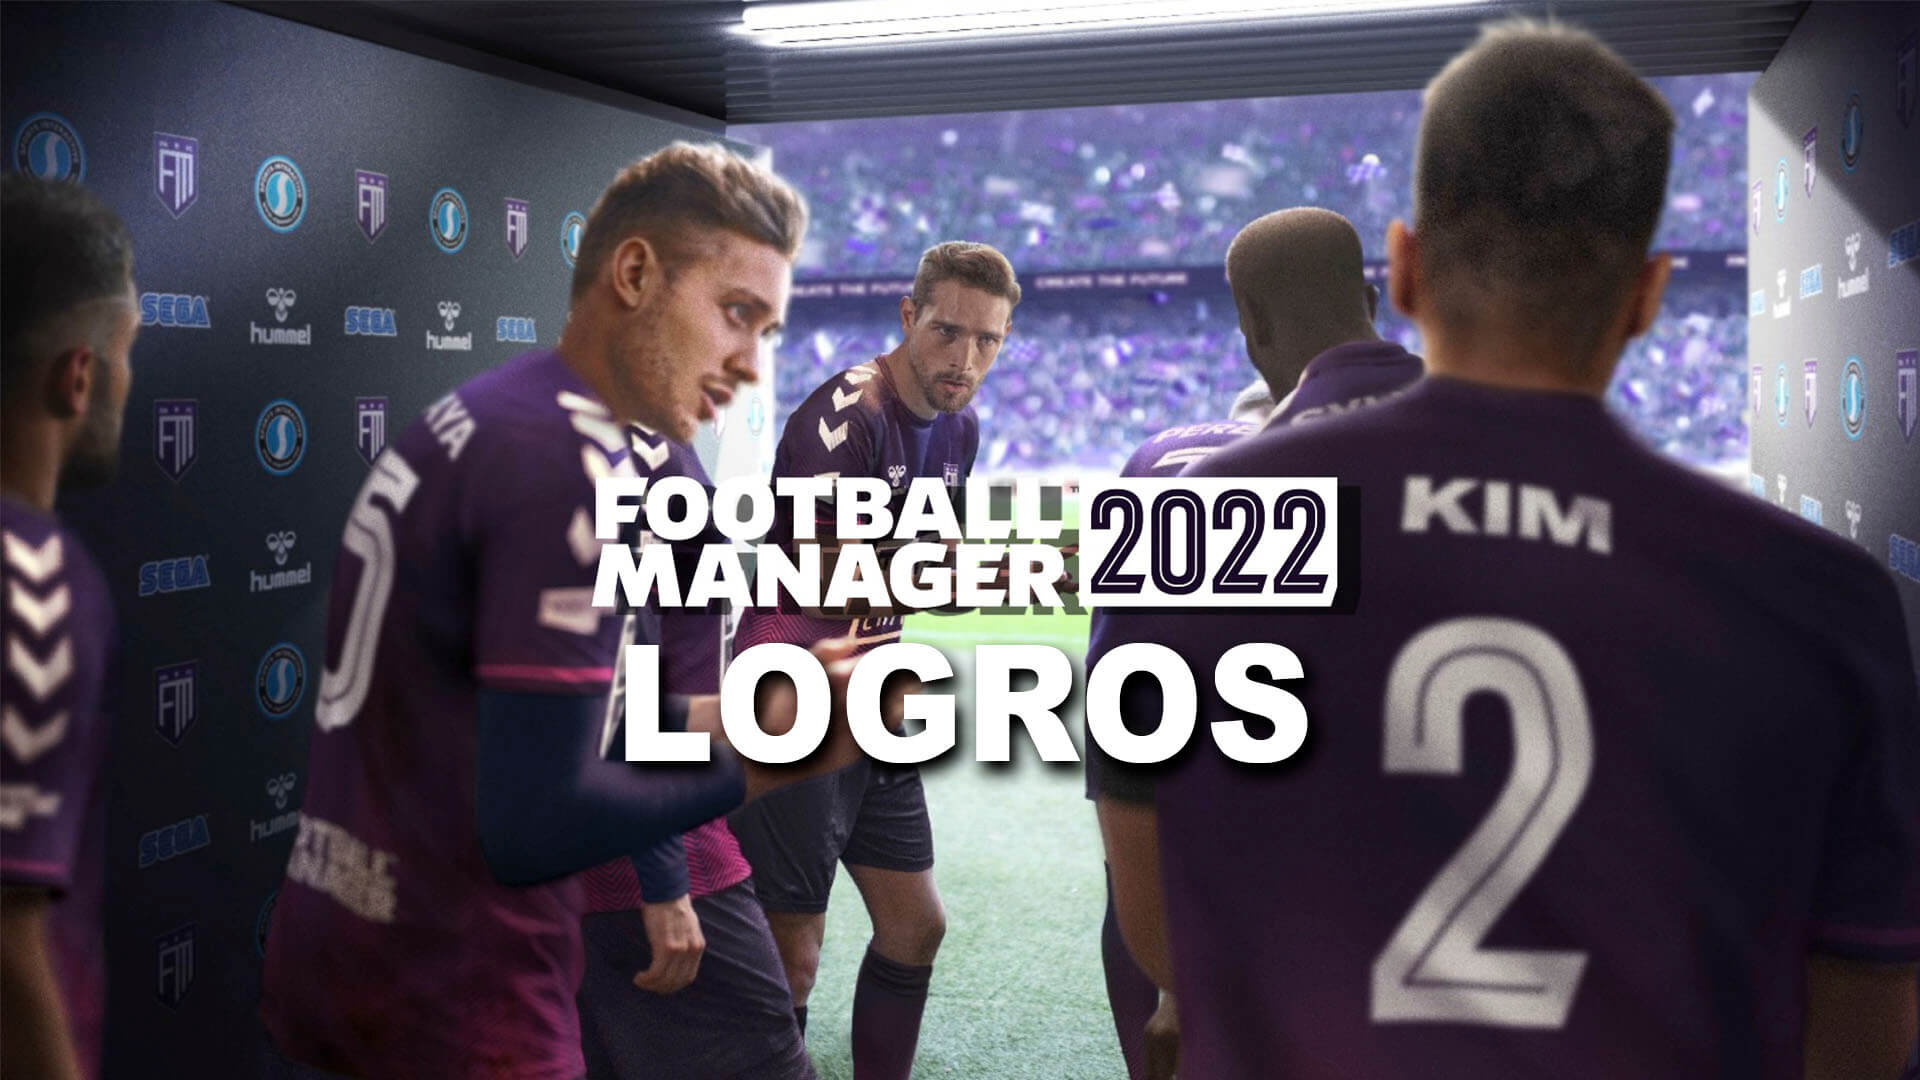 Football Manager 2022 logros